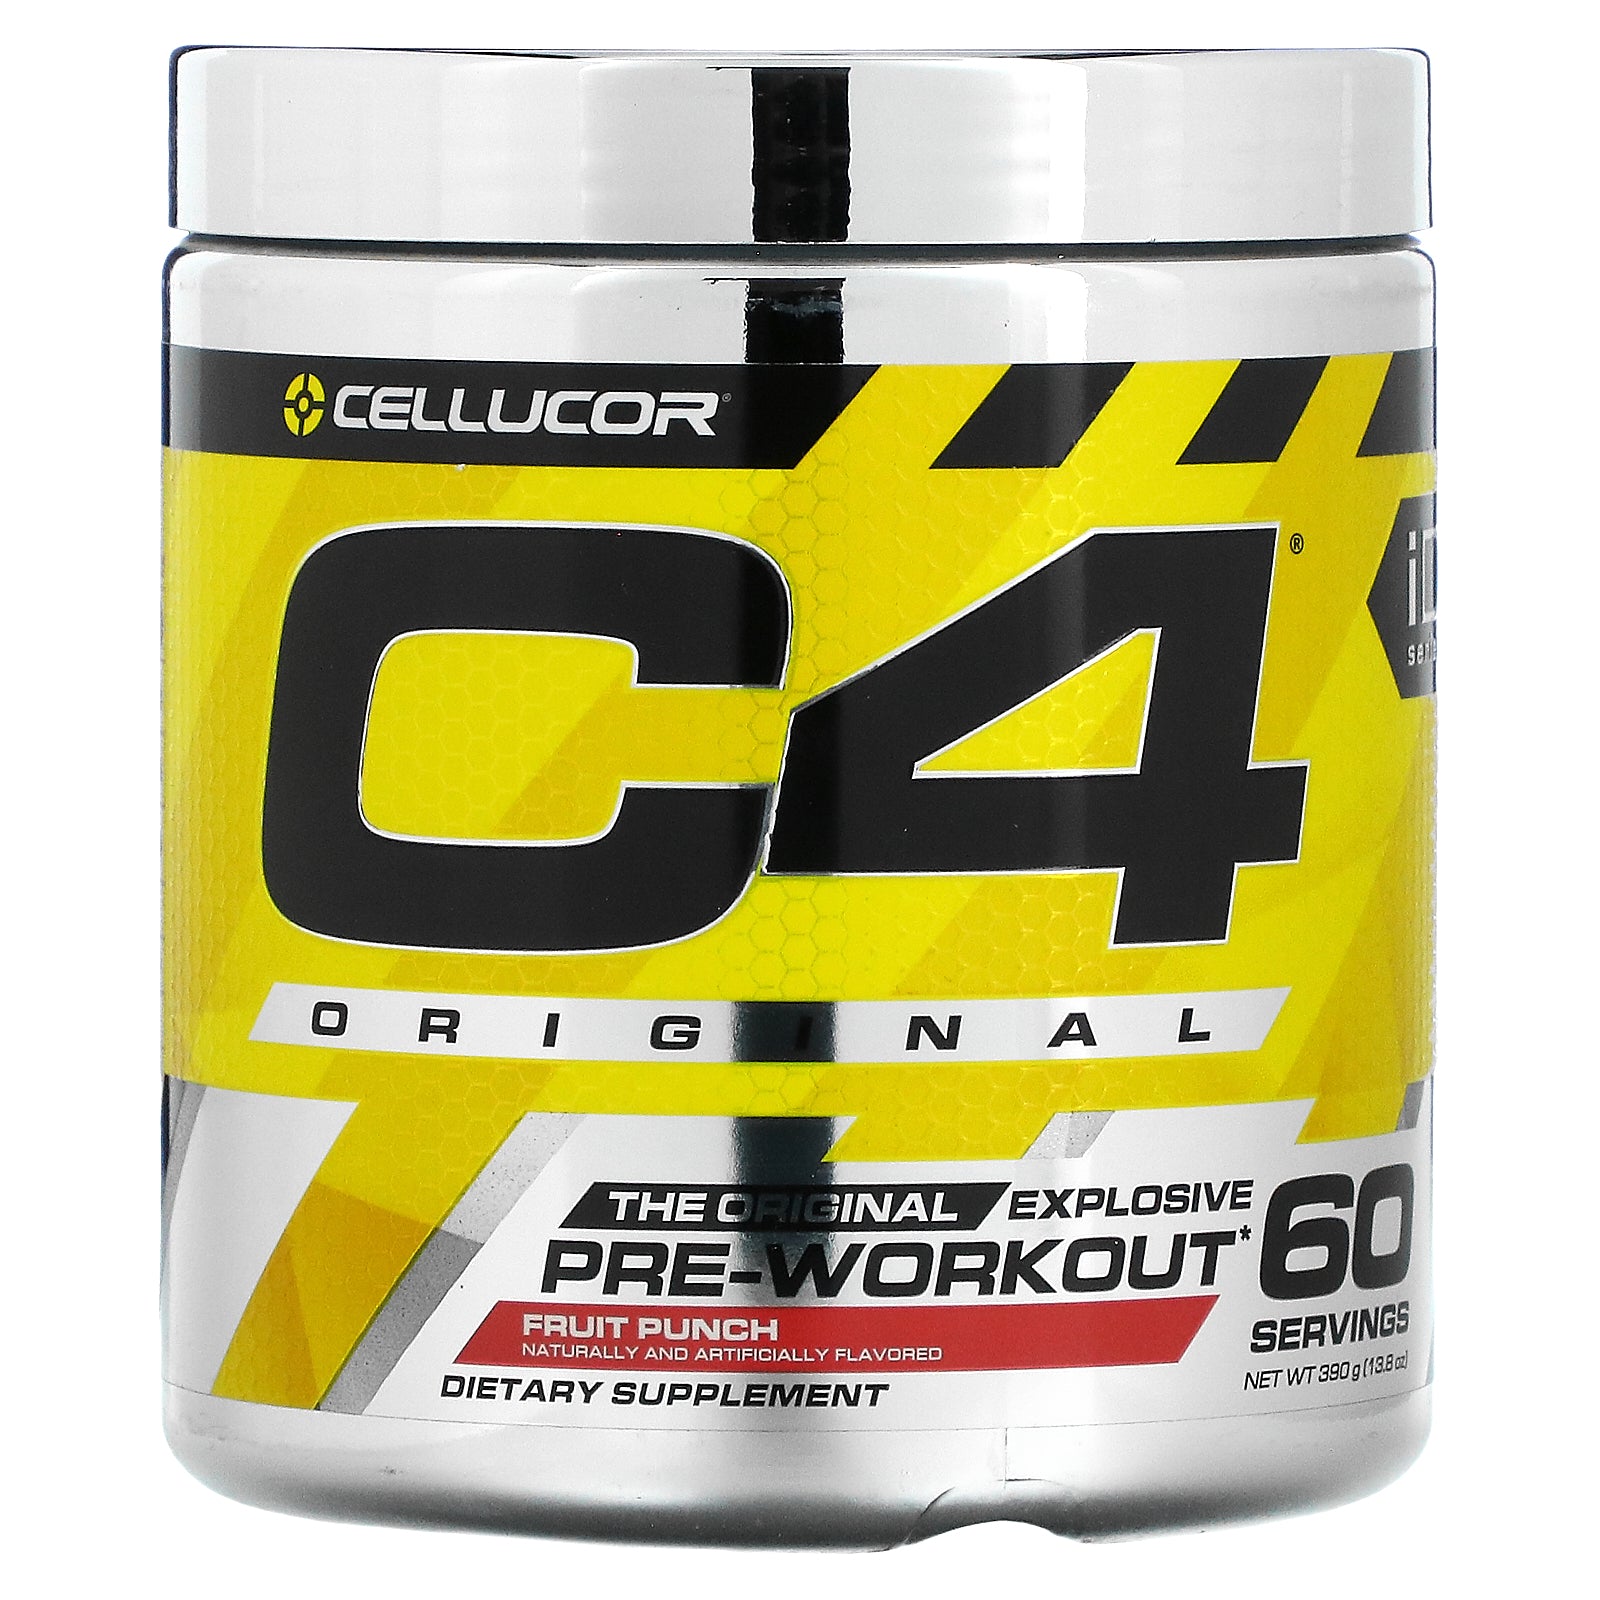 Cellucor, C4 Original Explosive, Pre-Workout, 13.8 oz (390 g)